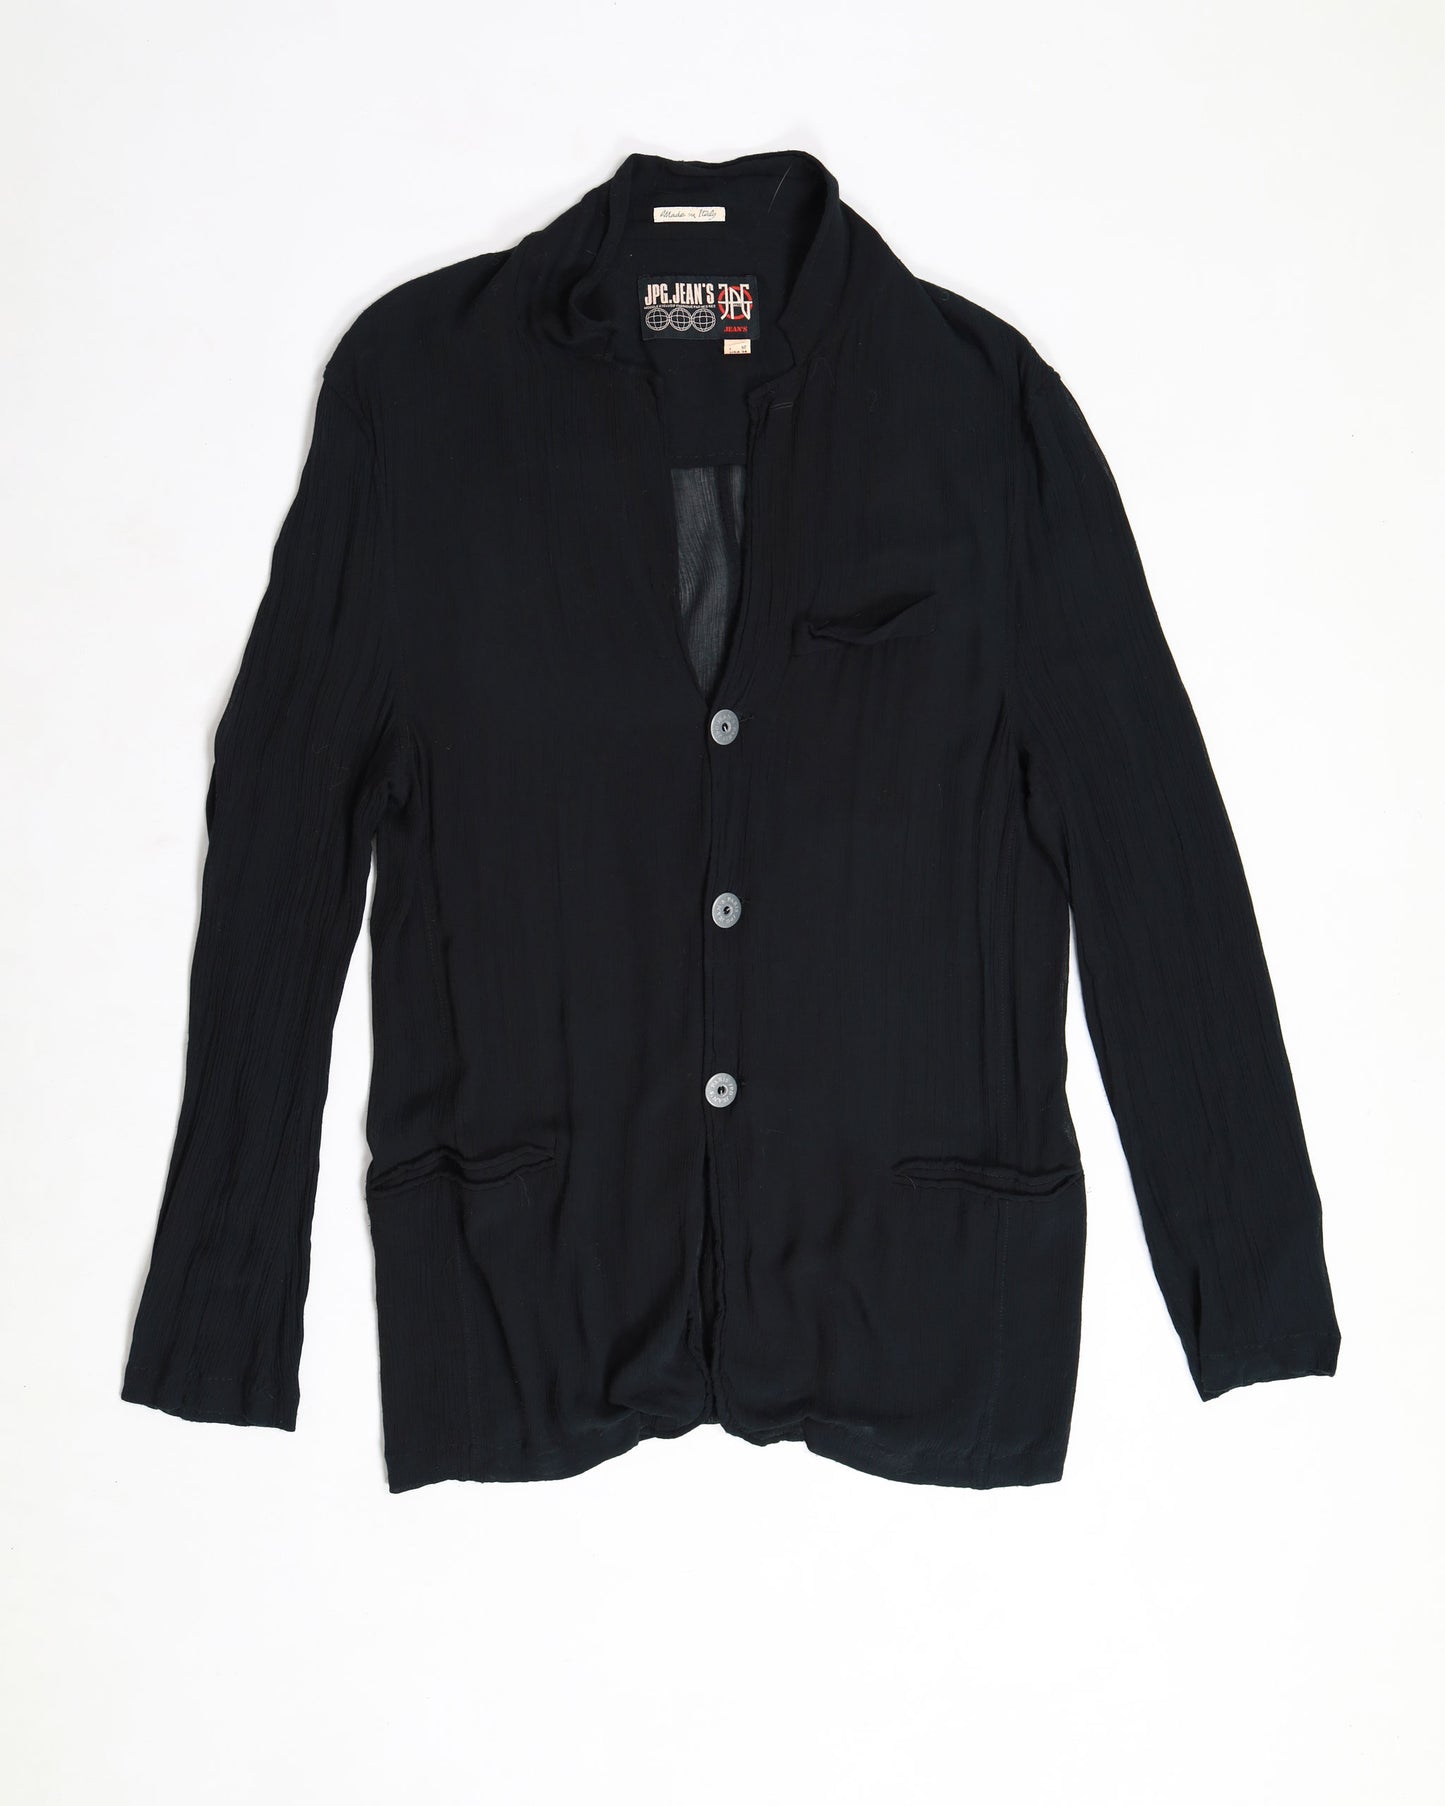 Jean’s Paul Gaultier Sheer Shirt Blouse Black